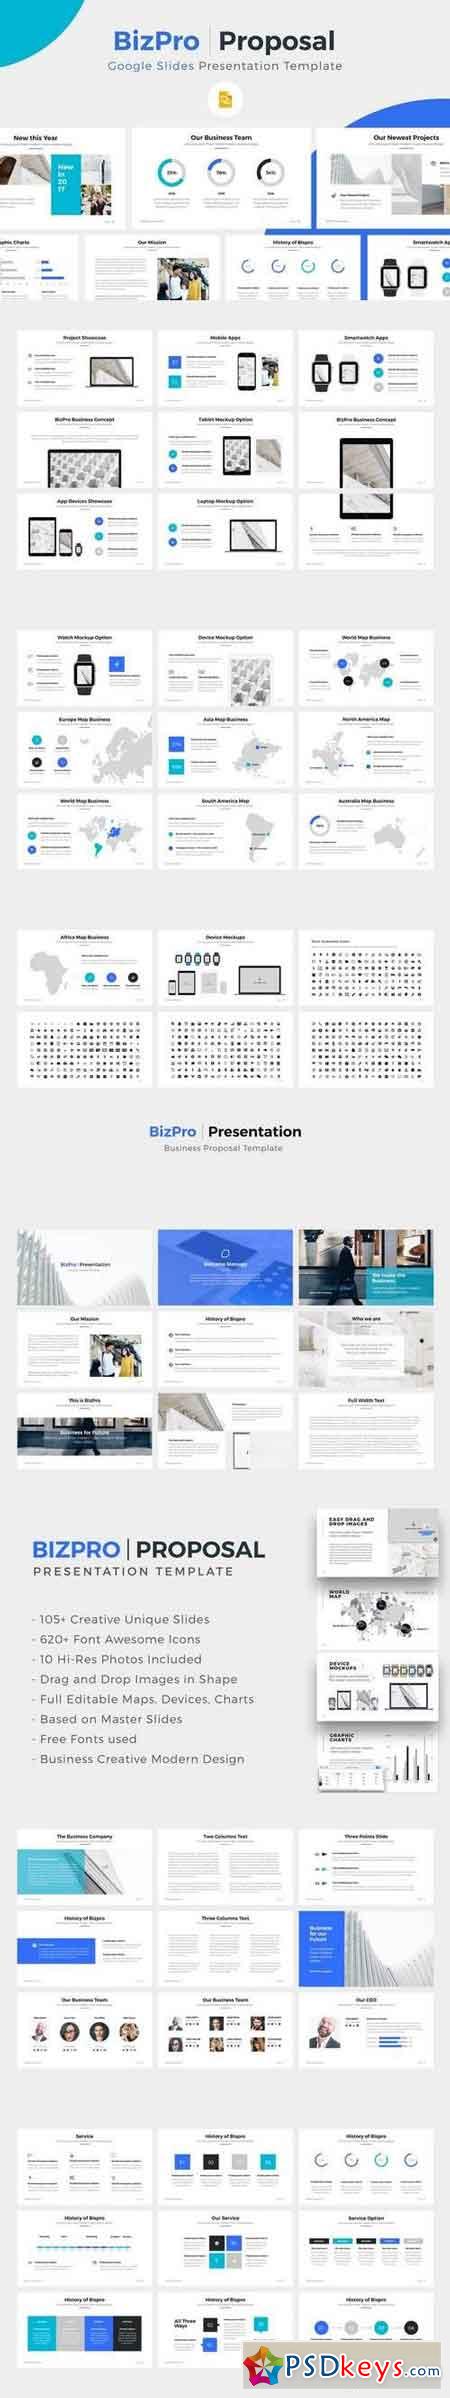 BizPro. Google Slide Presentation Template